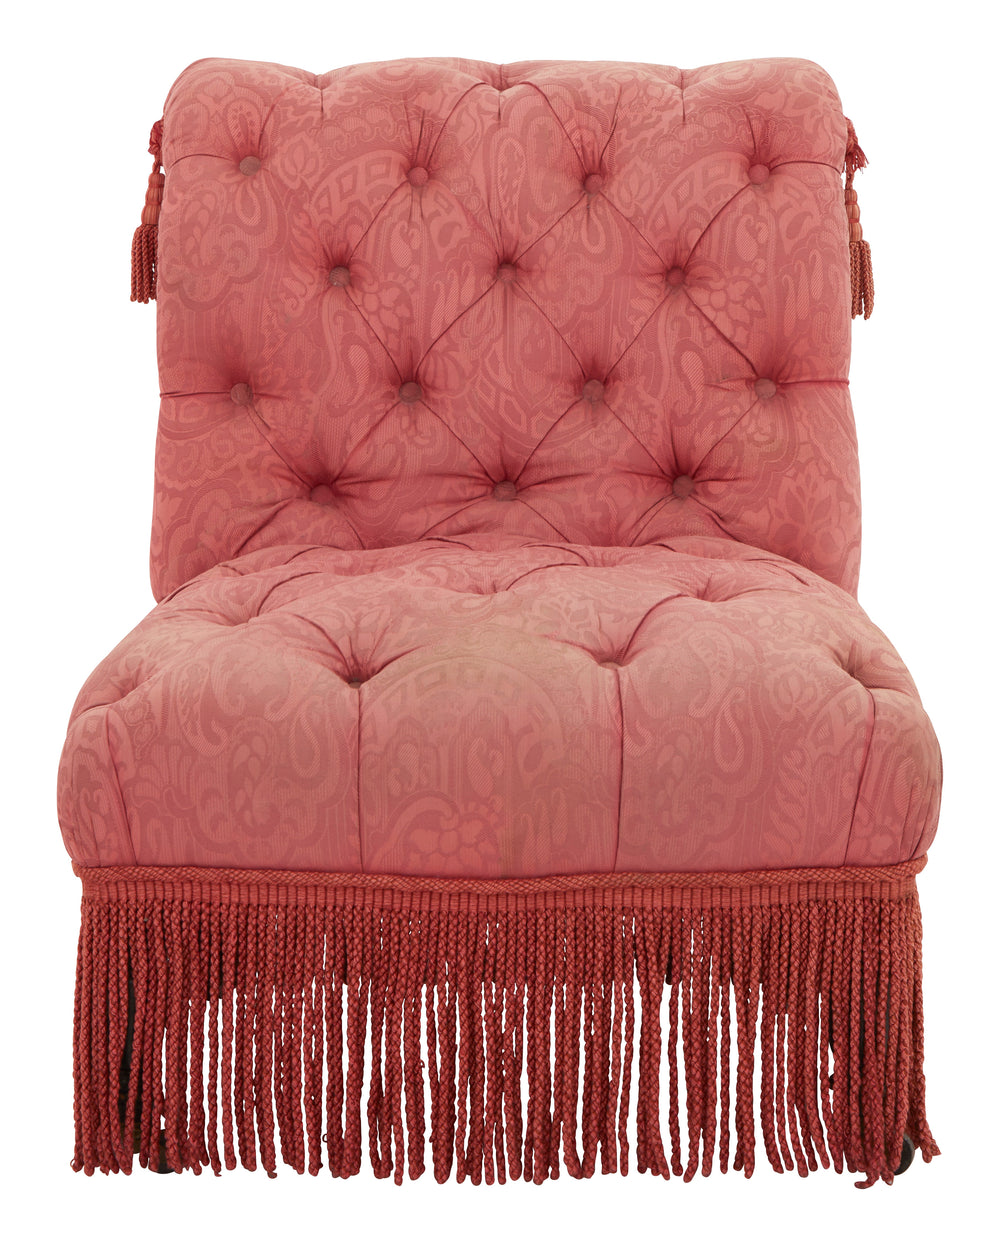 Antique Pink Napoleon III Slipper Chair